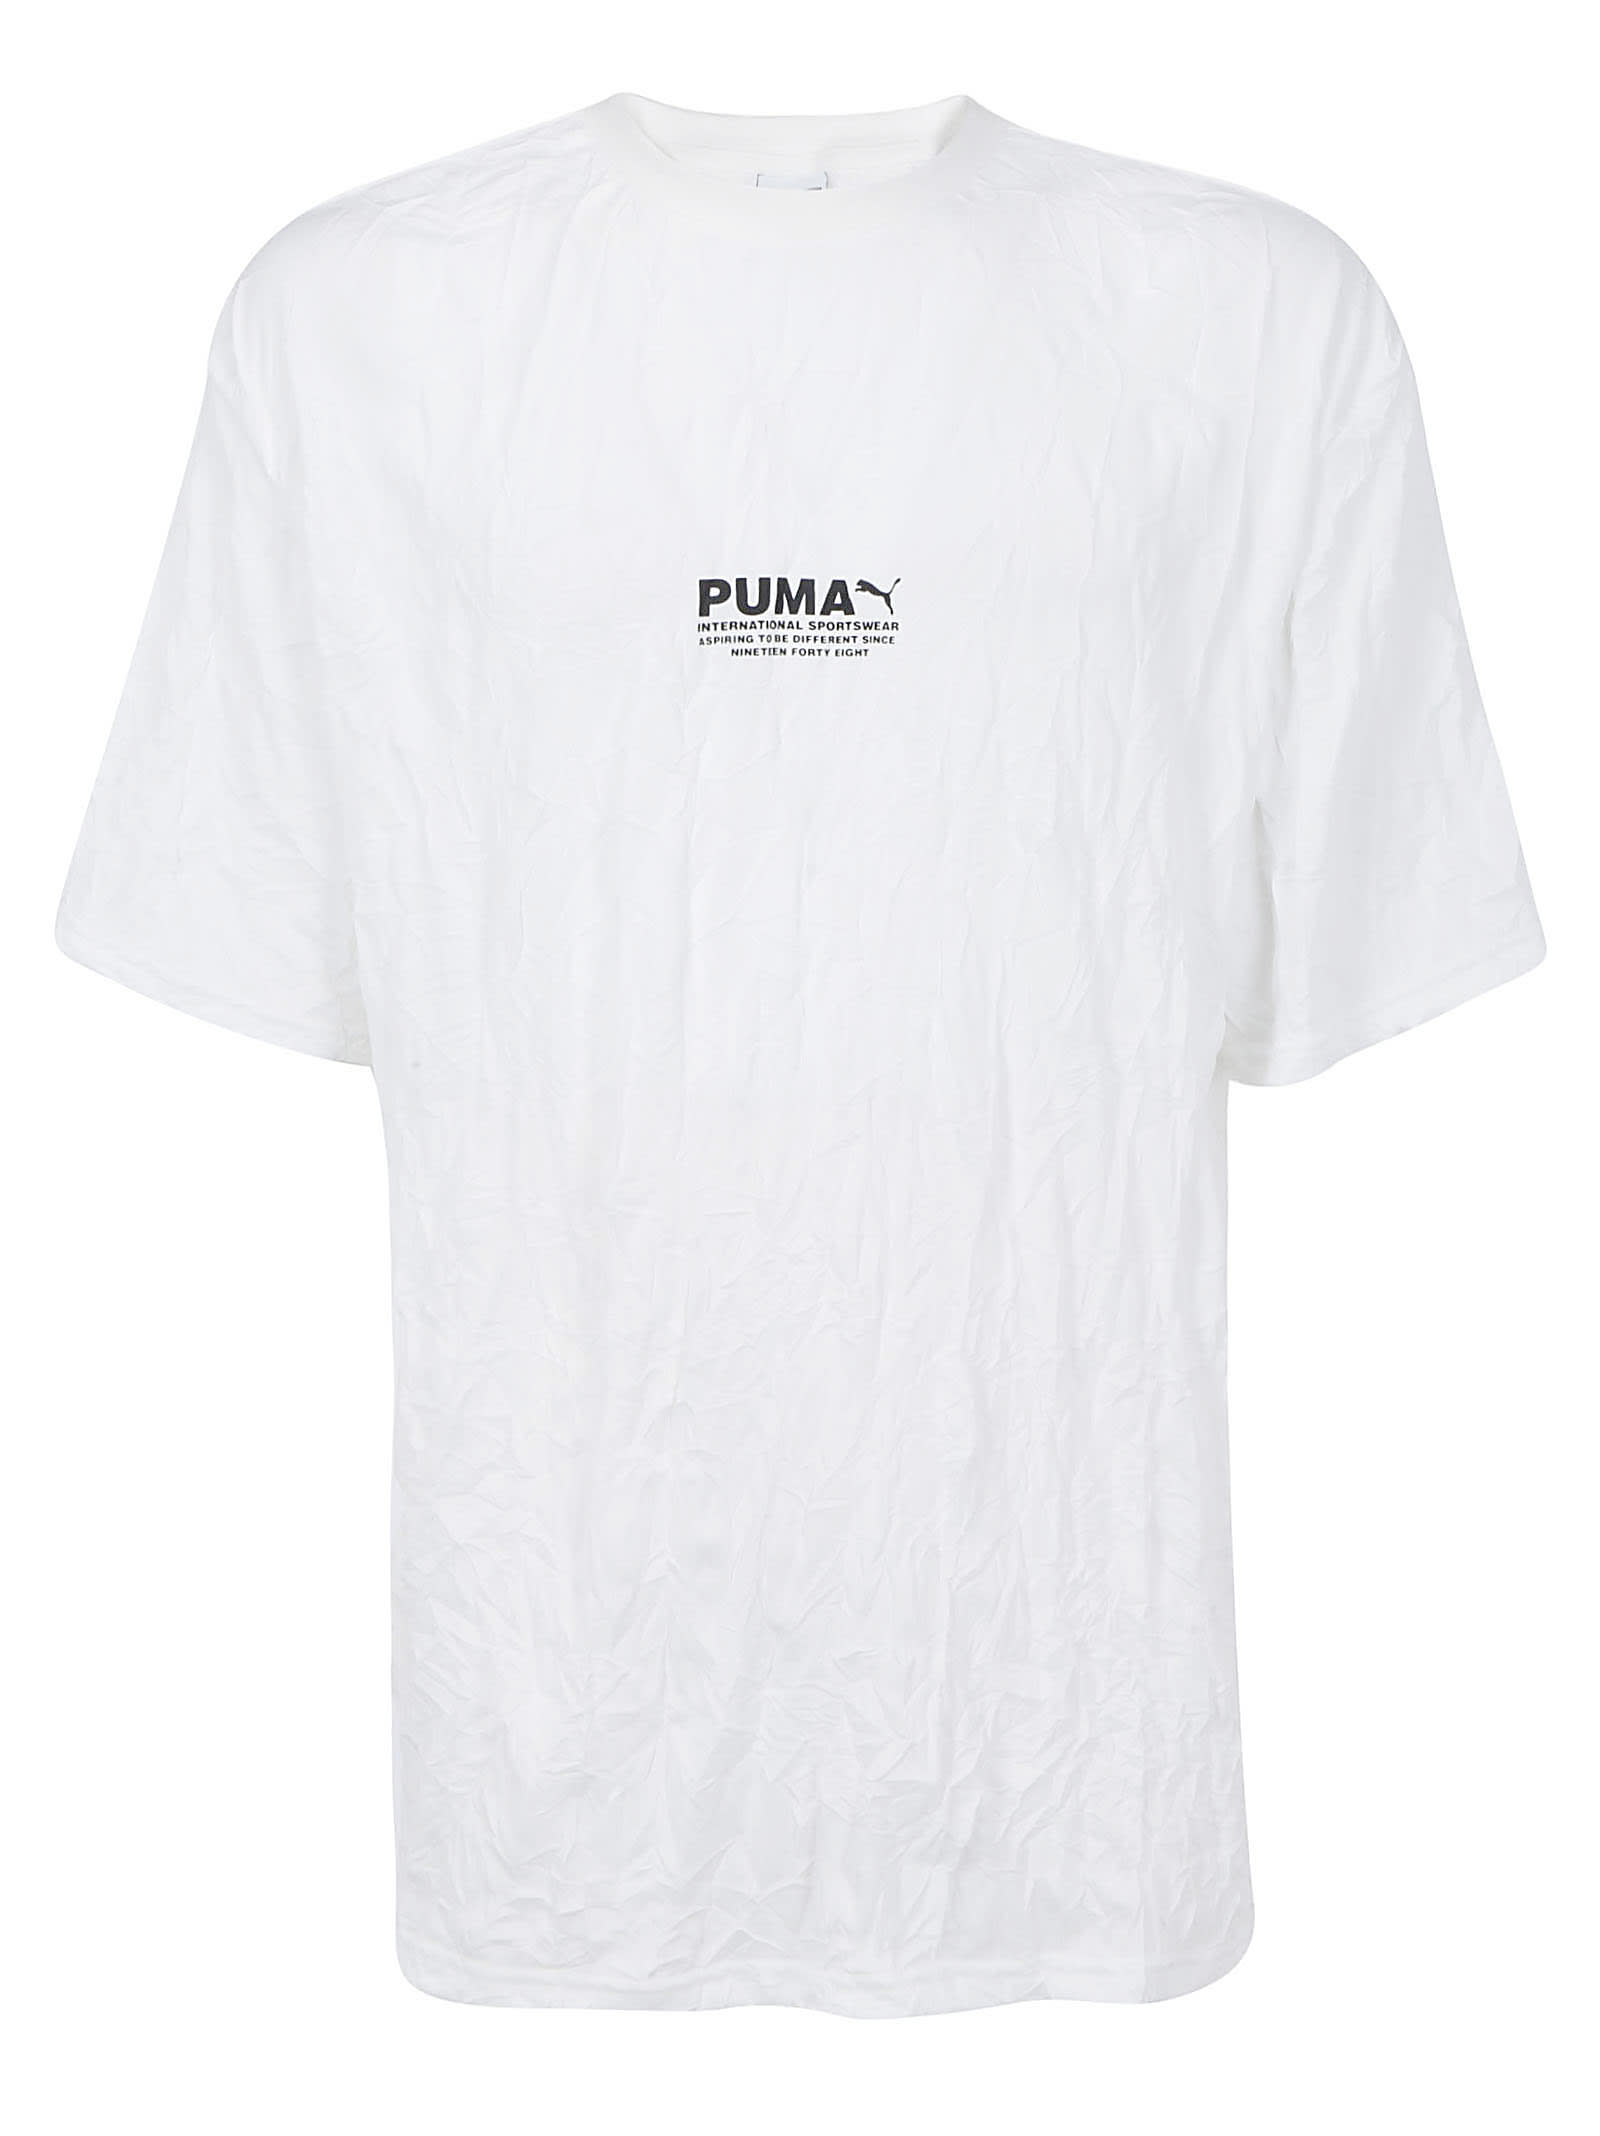 Puma Puma T Shirt White 11243226 Italist